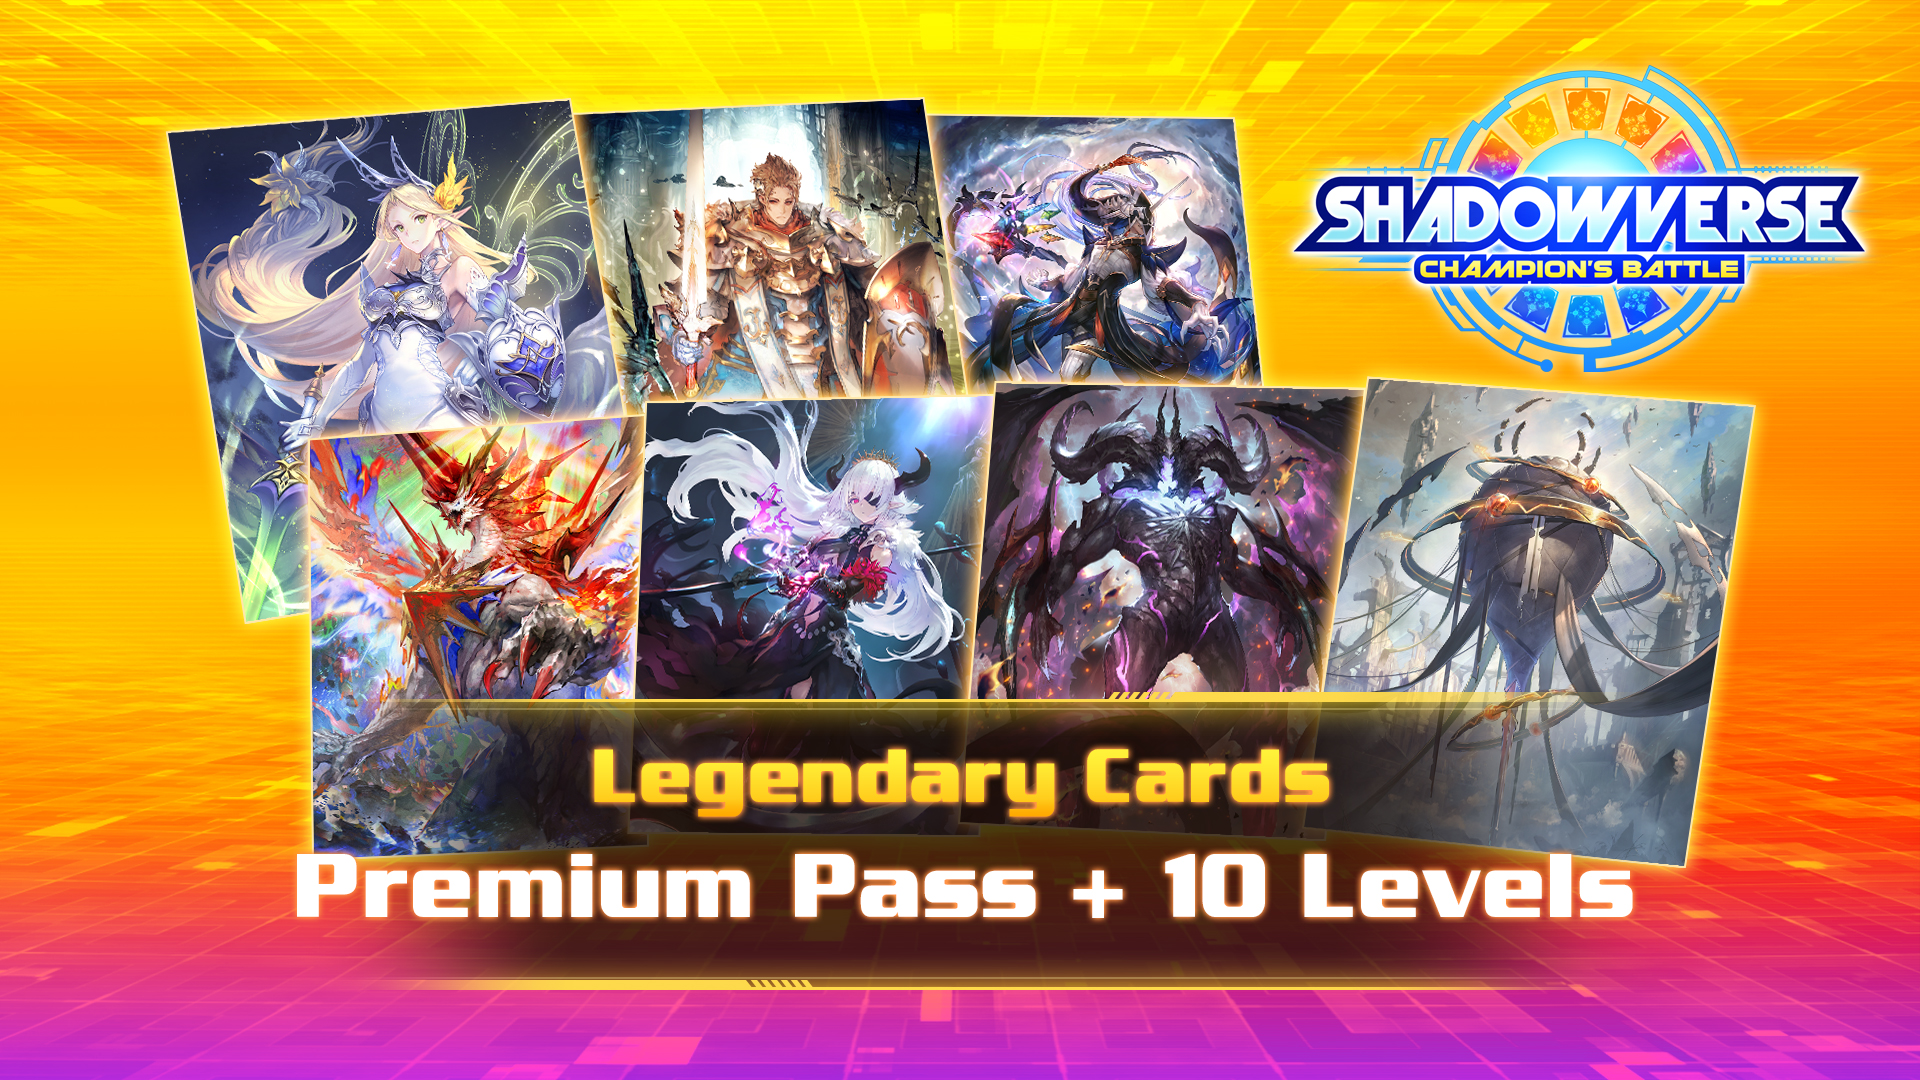 Legendary Cards Premium Pass + 10 Levels